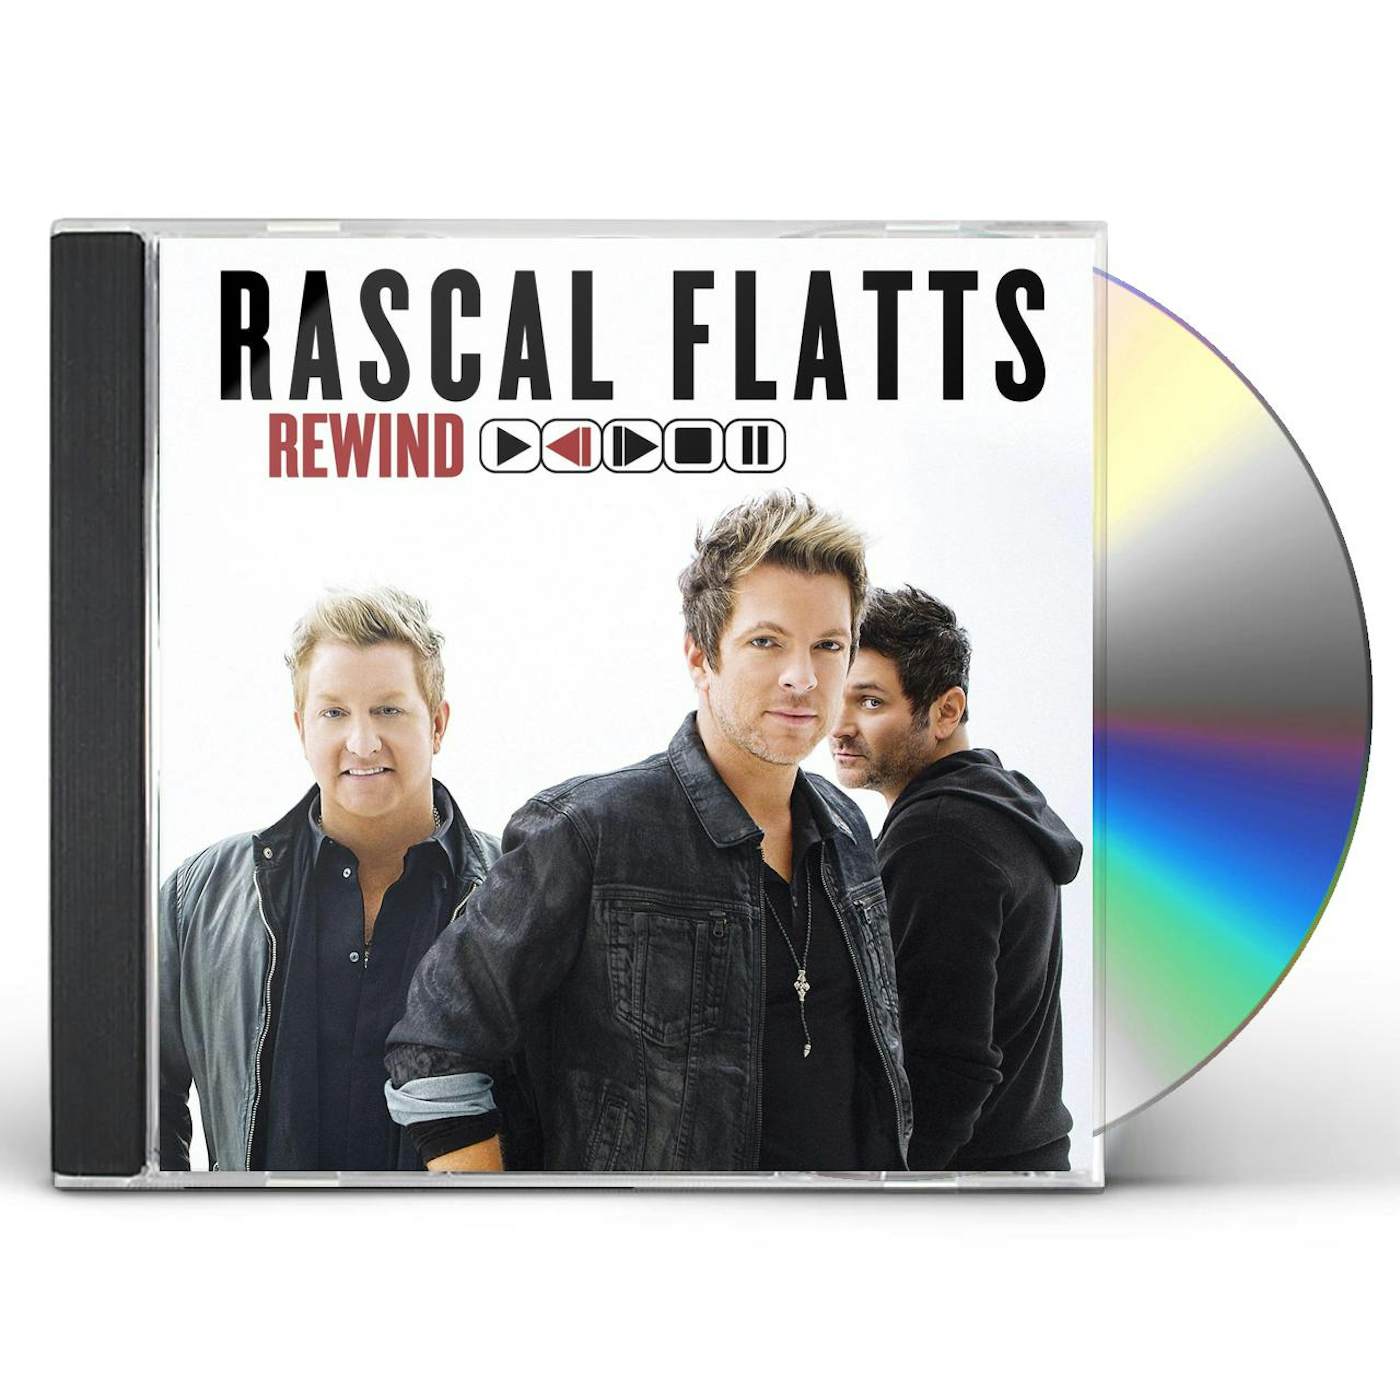 Rascal Flatts REWIND CD